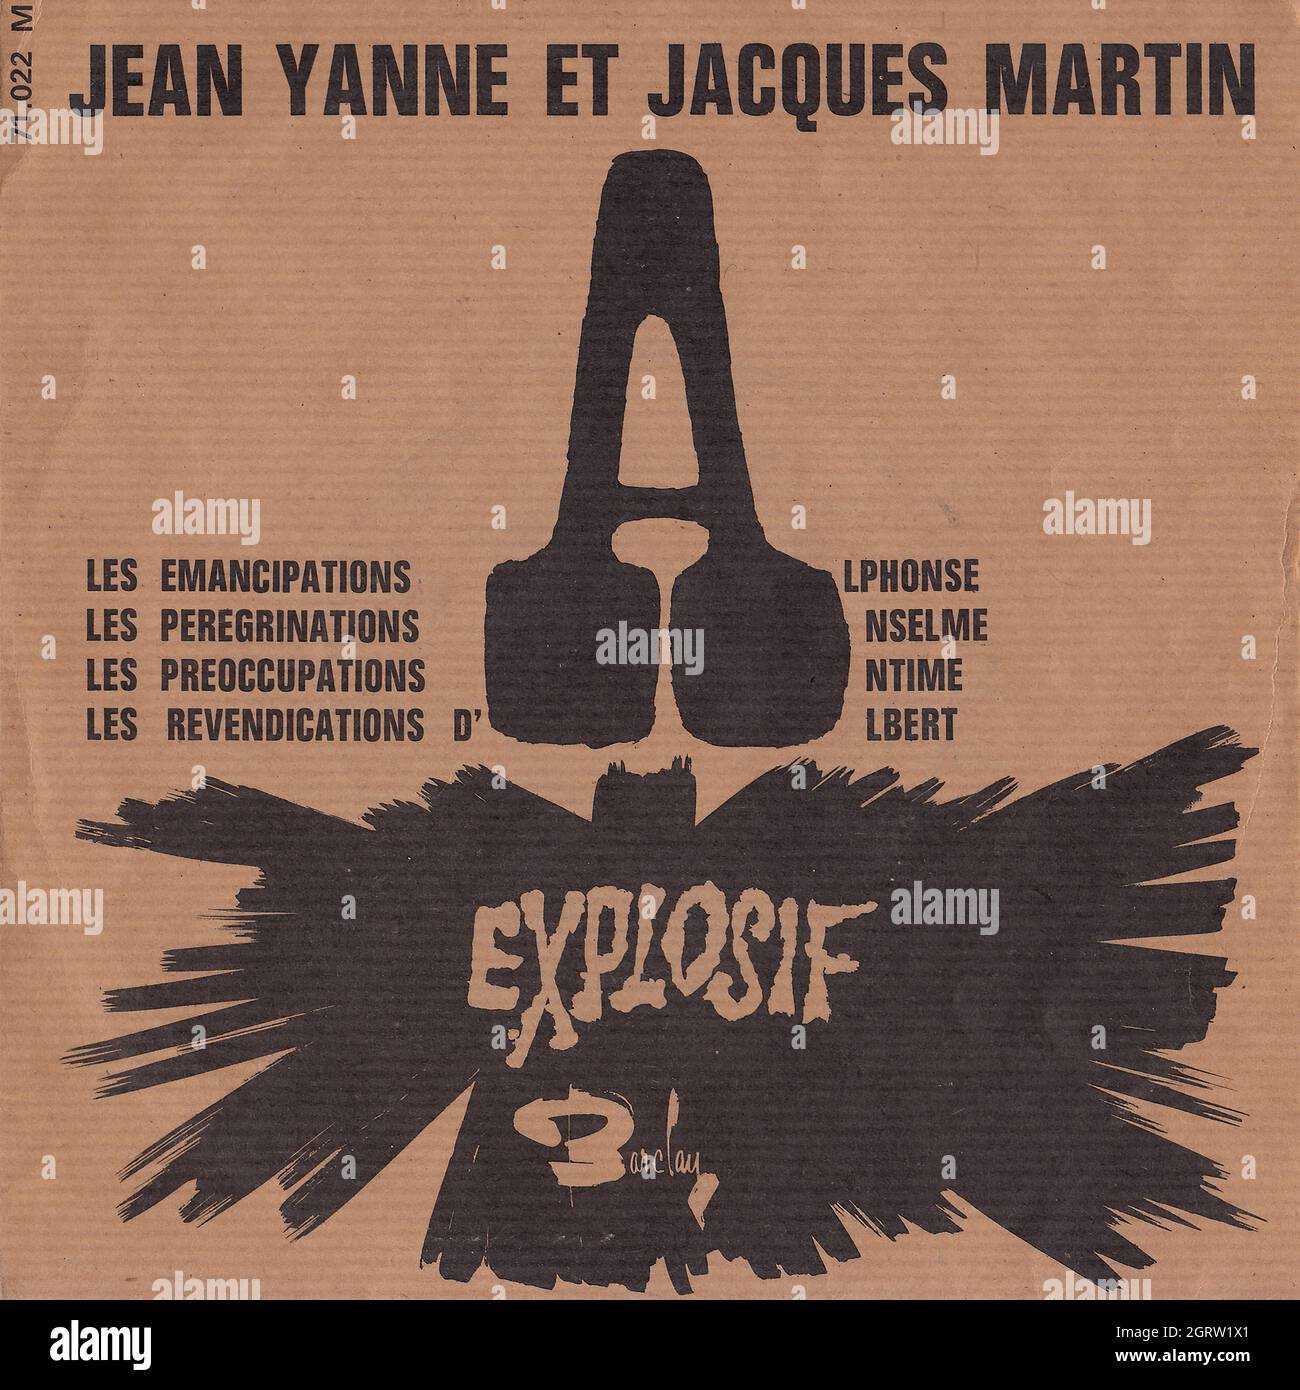 Jean Yanne et Jacques Martin - Explosif EP - Vintage Vinyl Record Cover Stock Photo